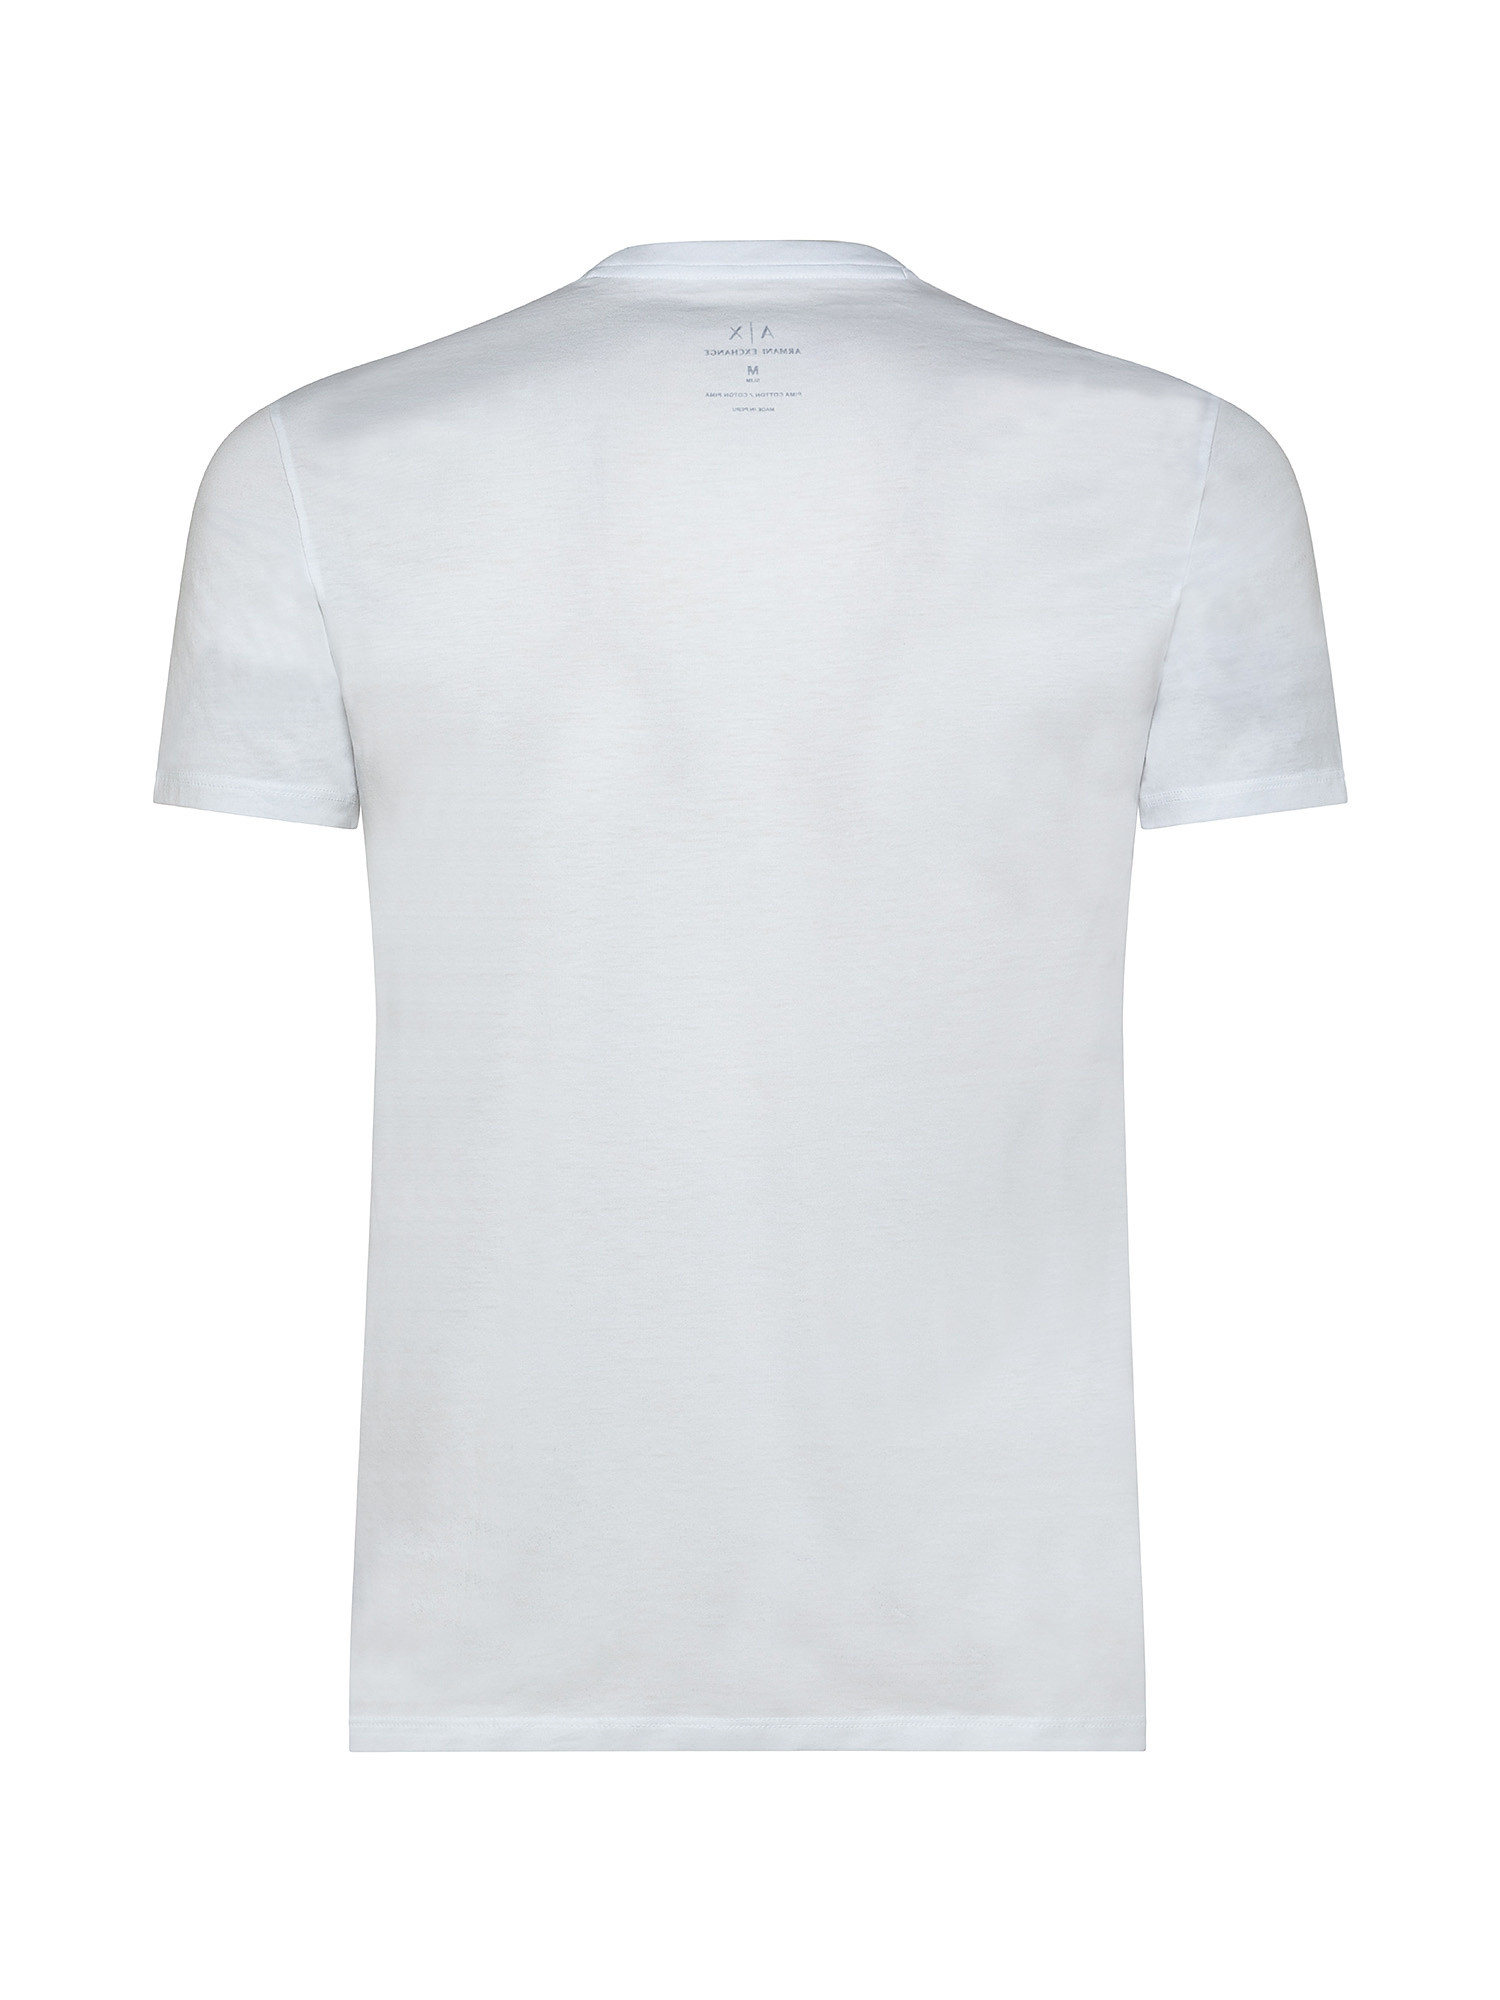 T-shirt, White, large image number 1